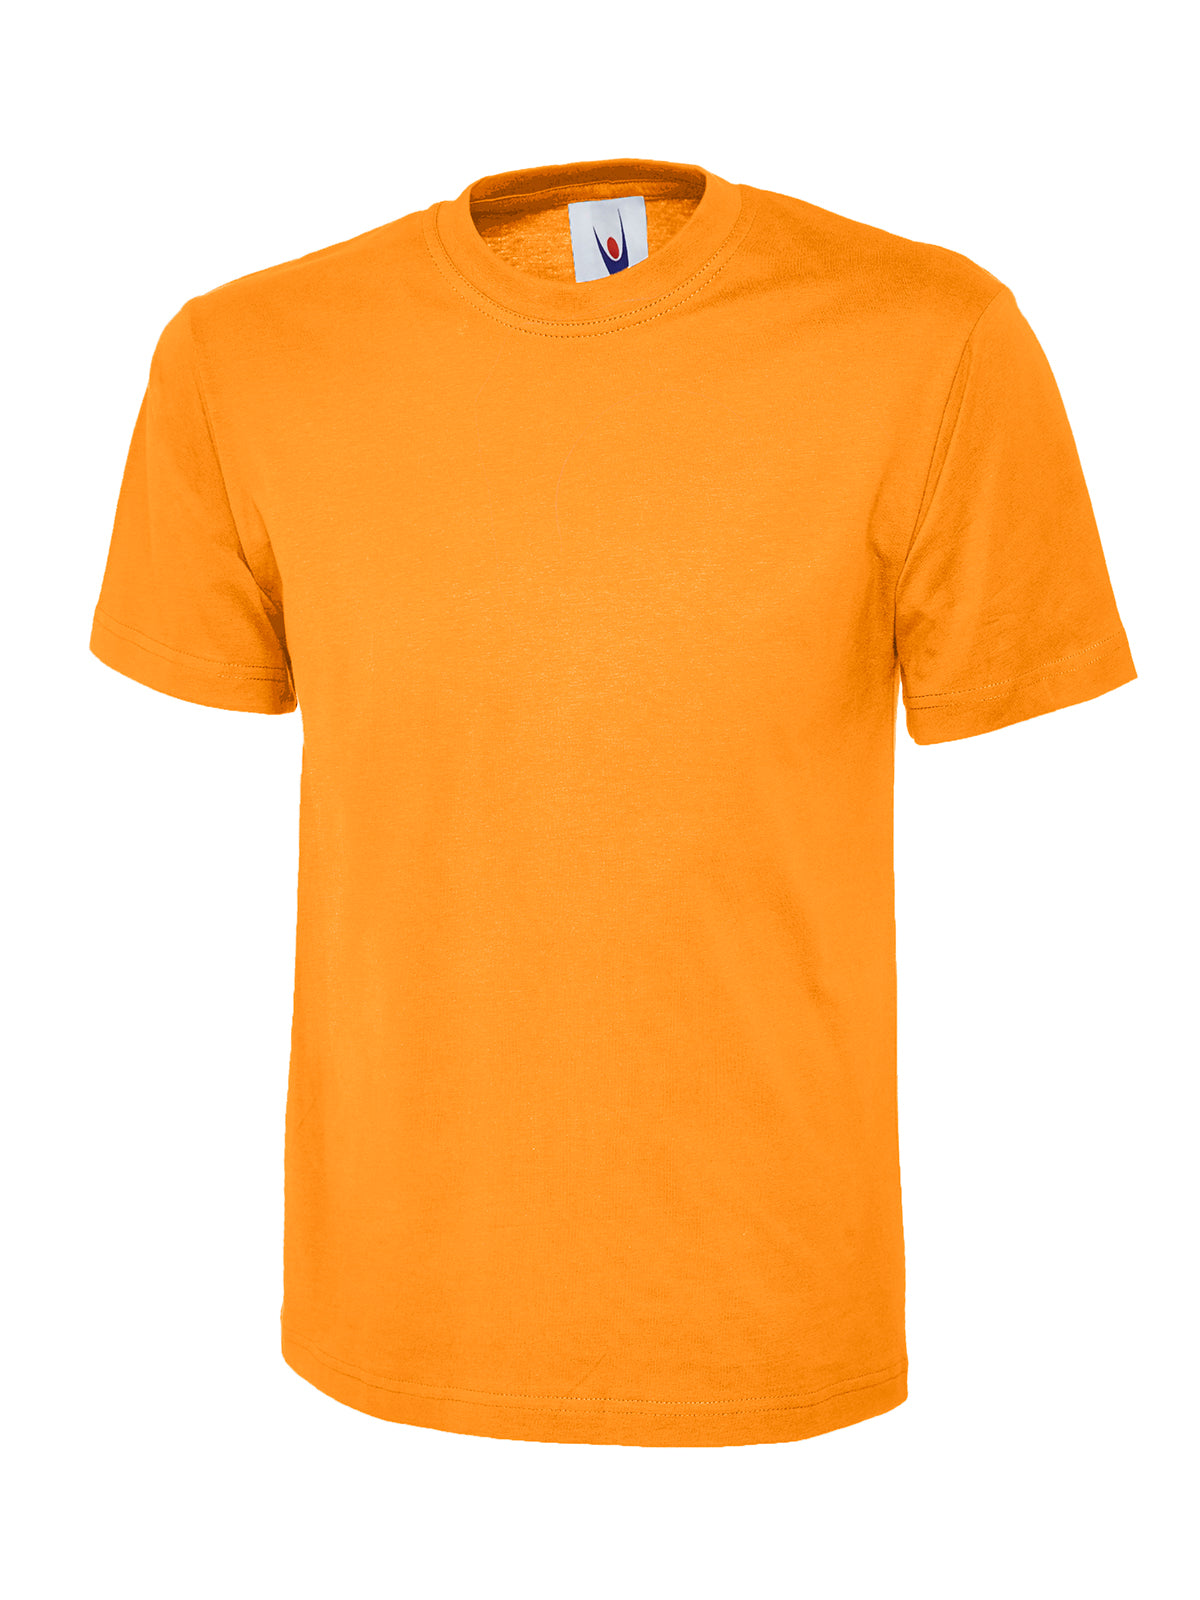 Uneek Classic T-shirt UC301 - Orange